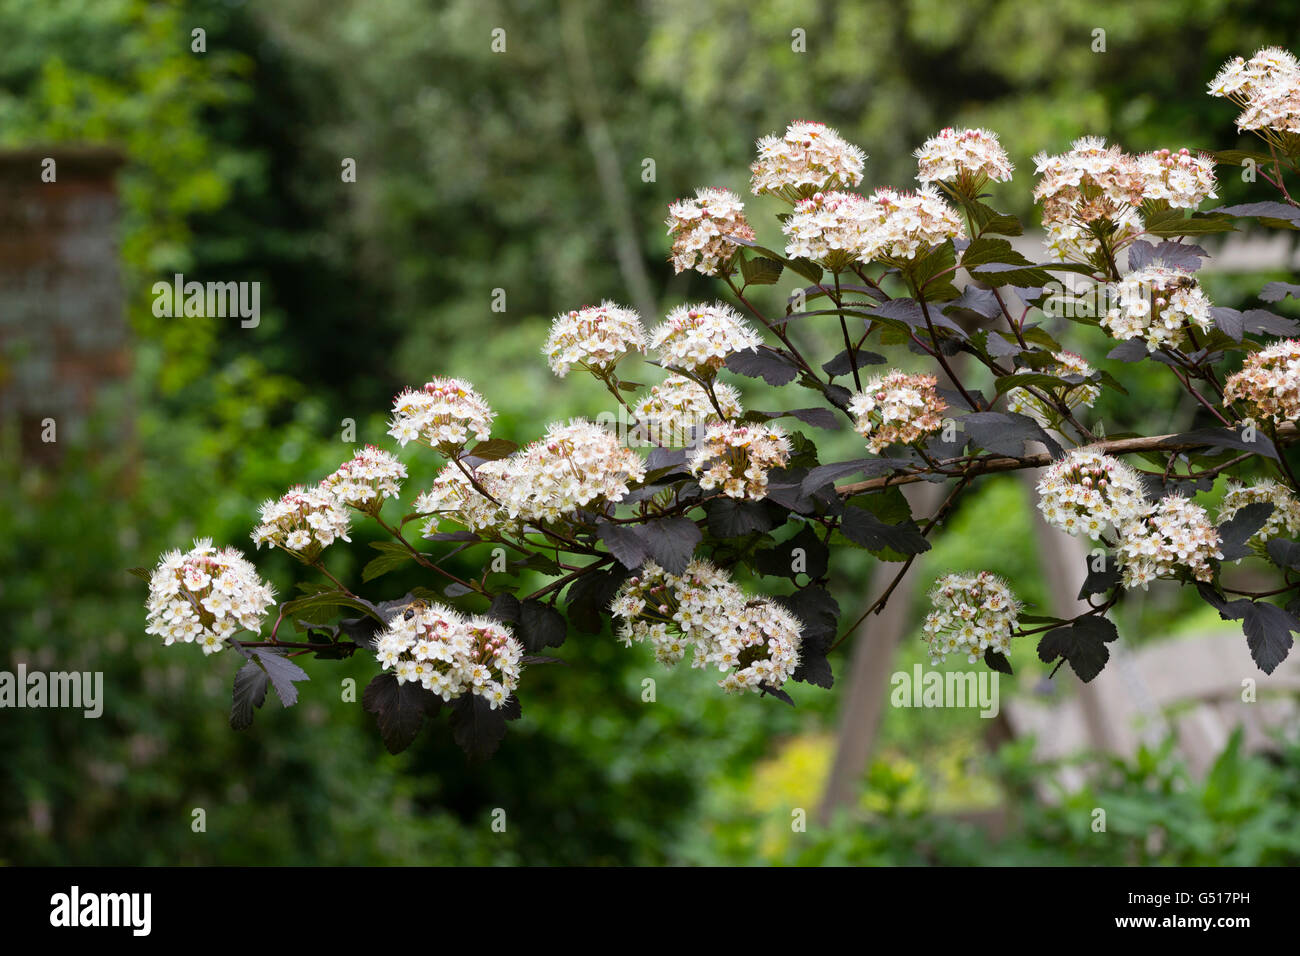 White flowers and dark foliage of the hardy ninebark shrub, Physocarpus opulifolius 'Diablo' Stock Photo